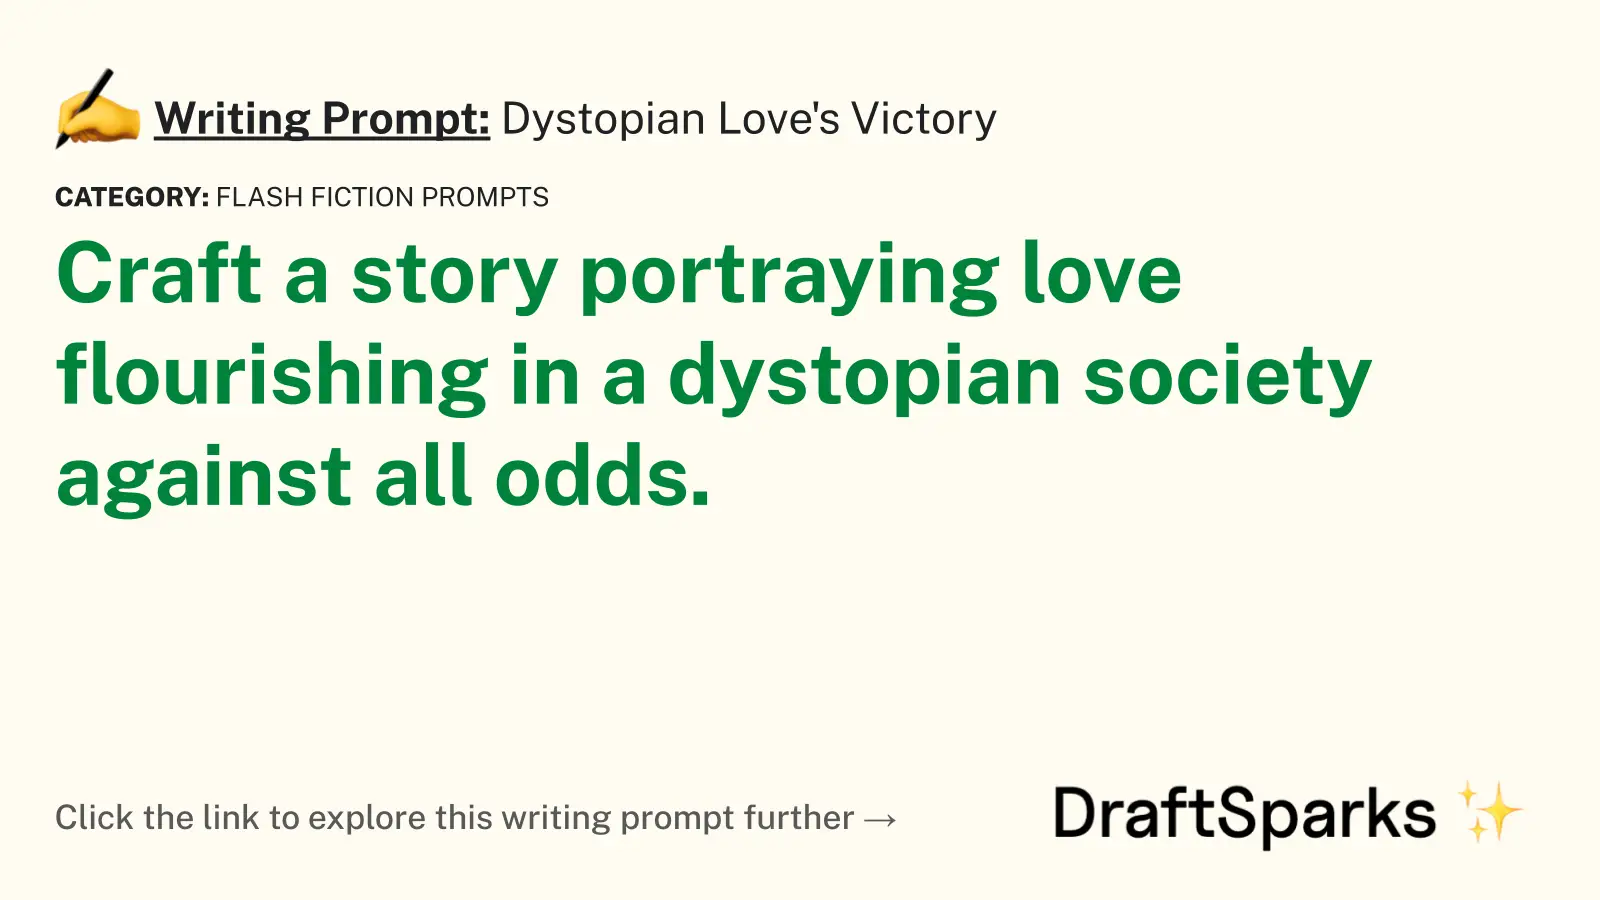 Dystopian Love’s Victory